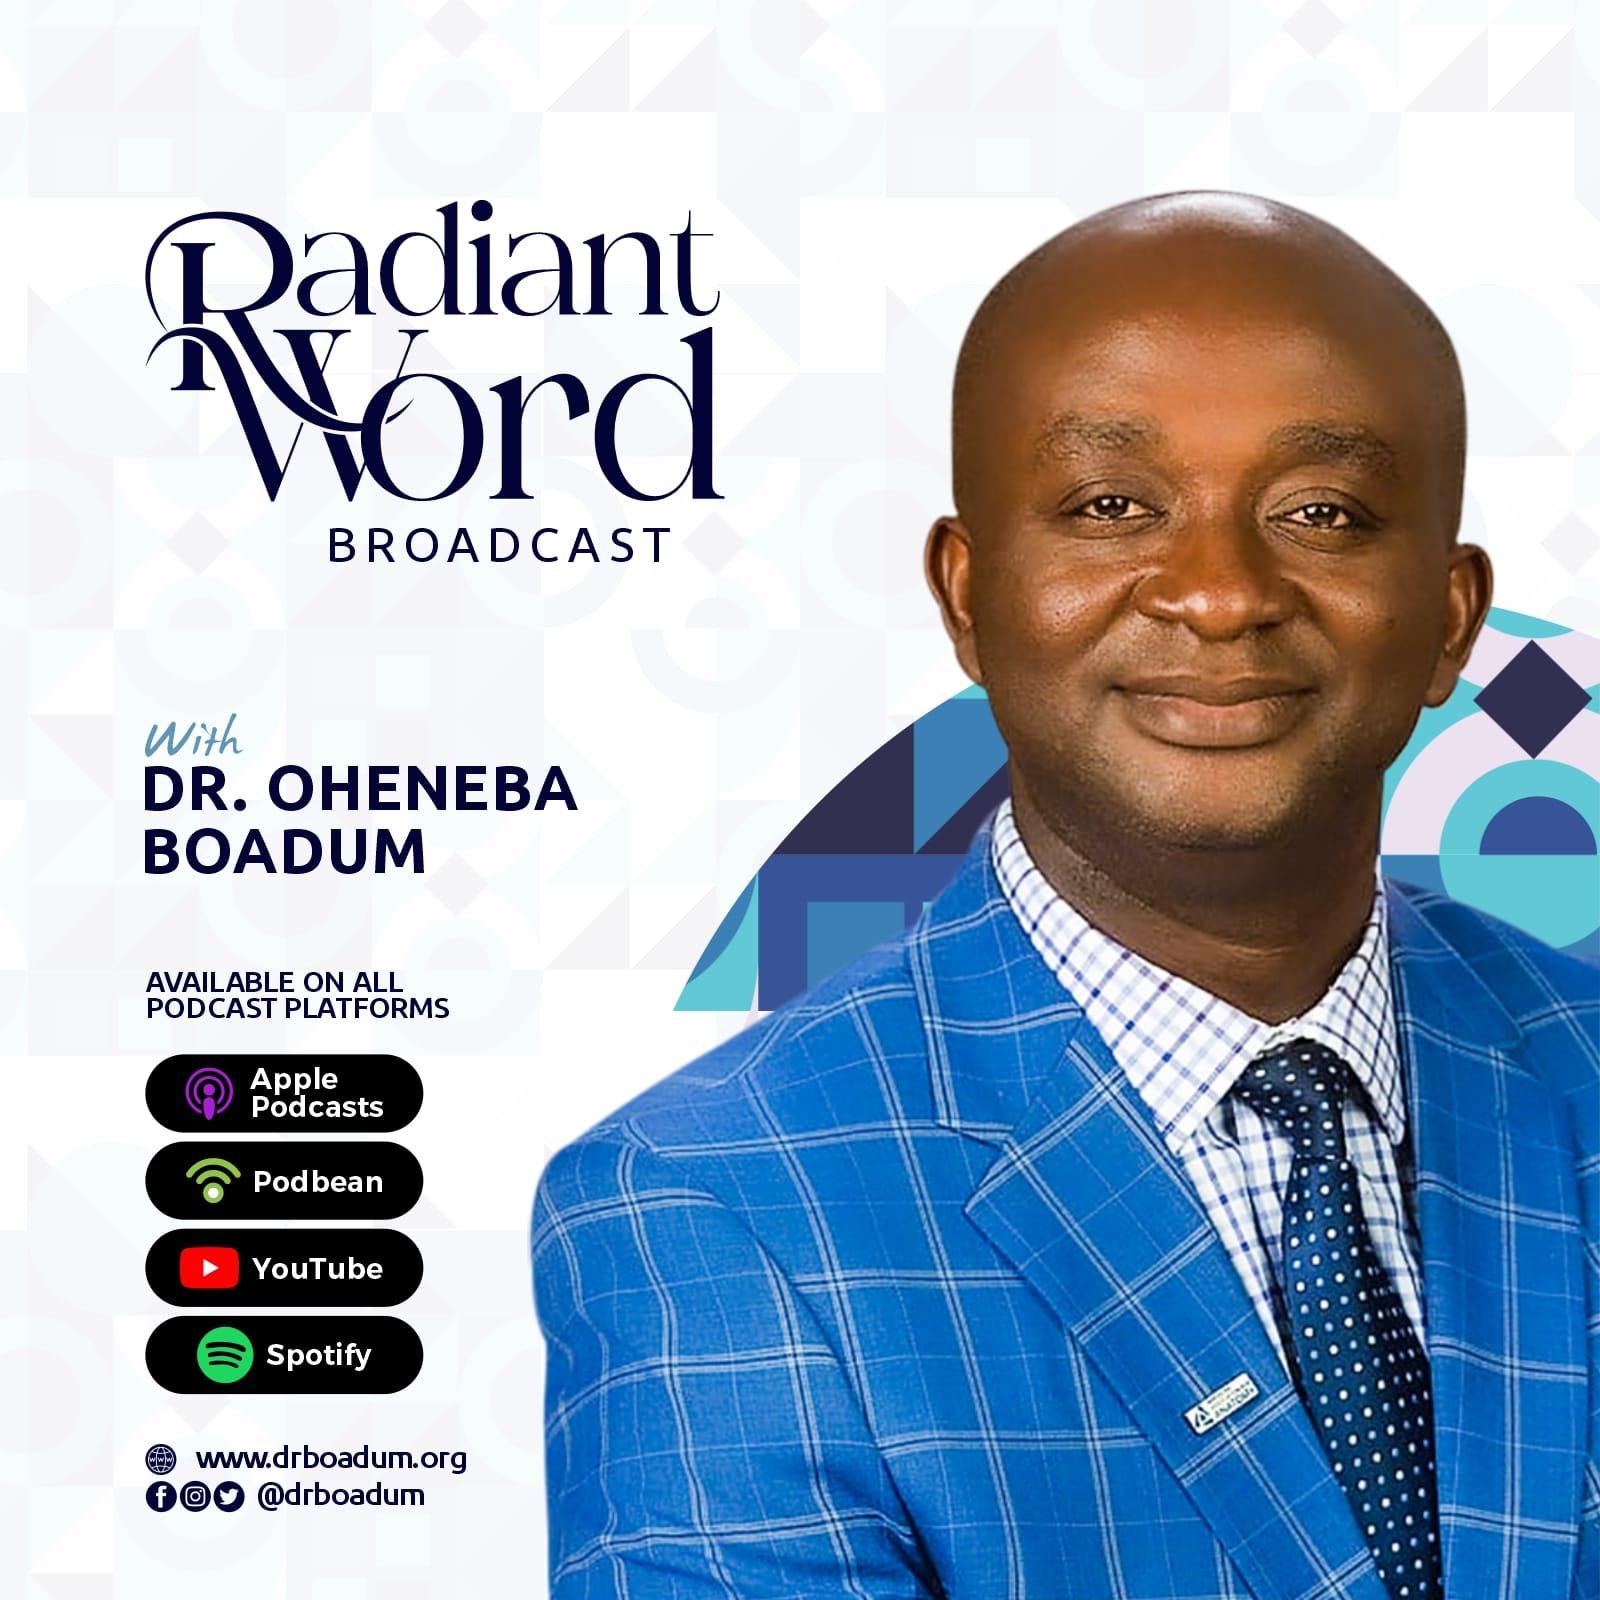 Dr Oheneba Boadum